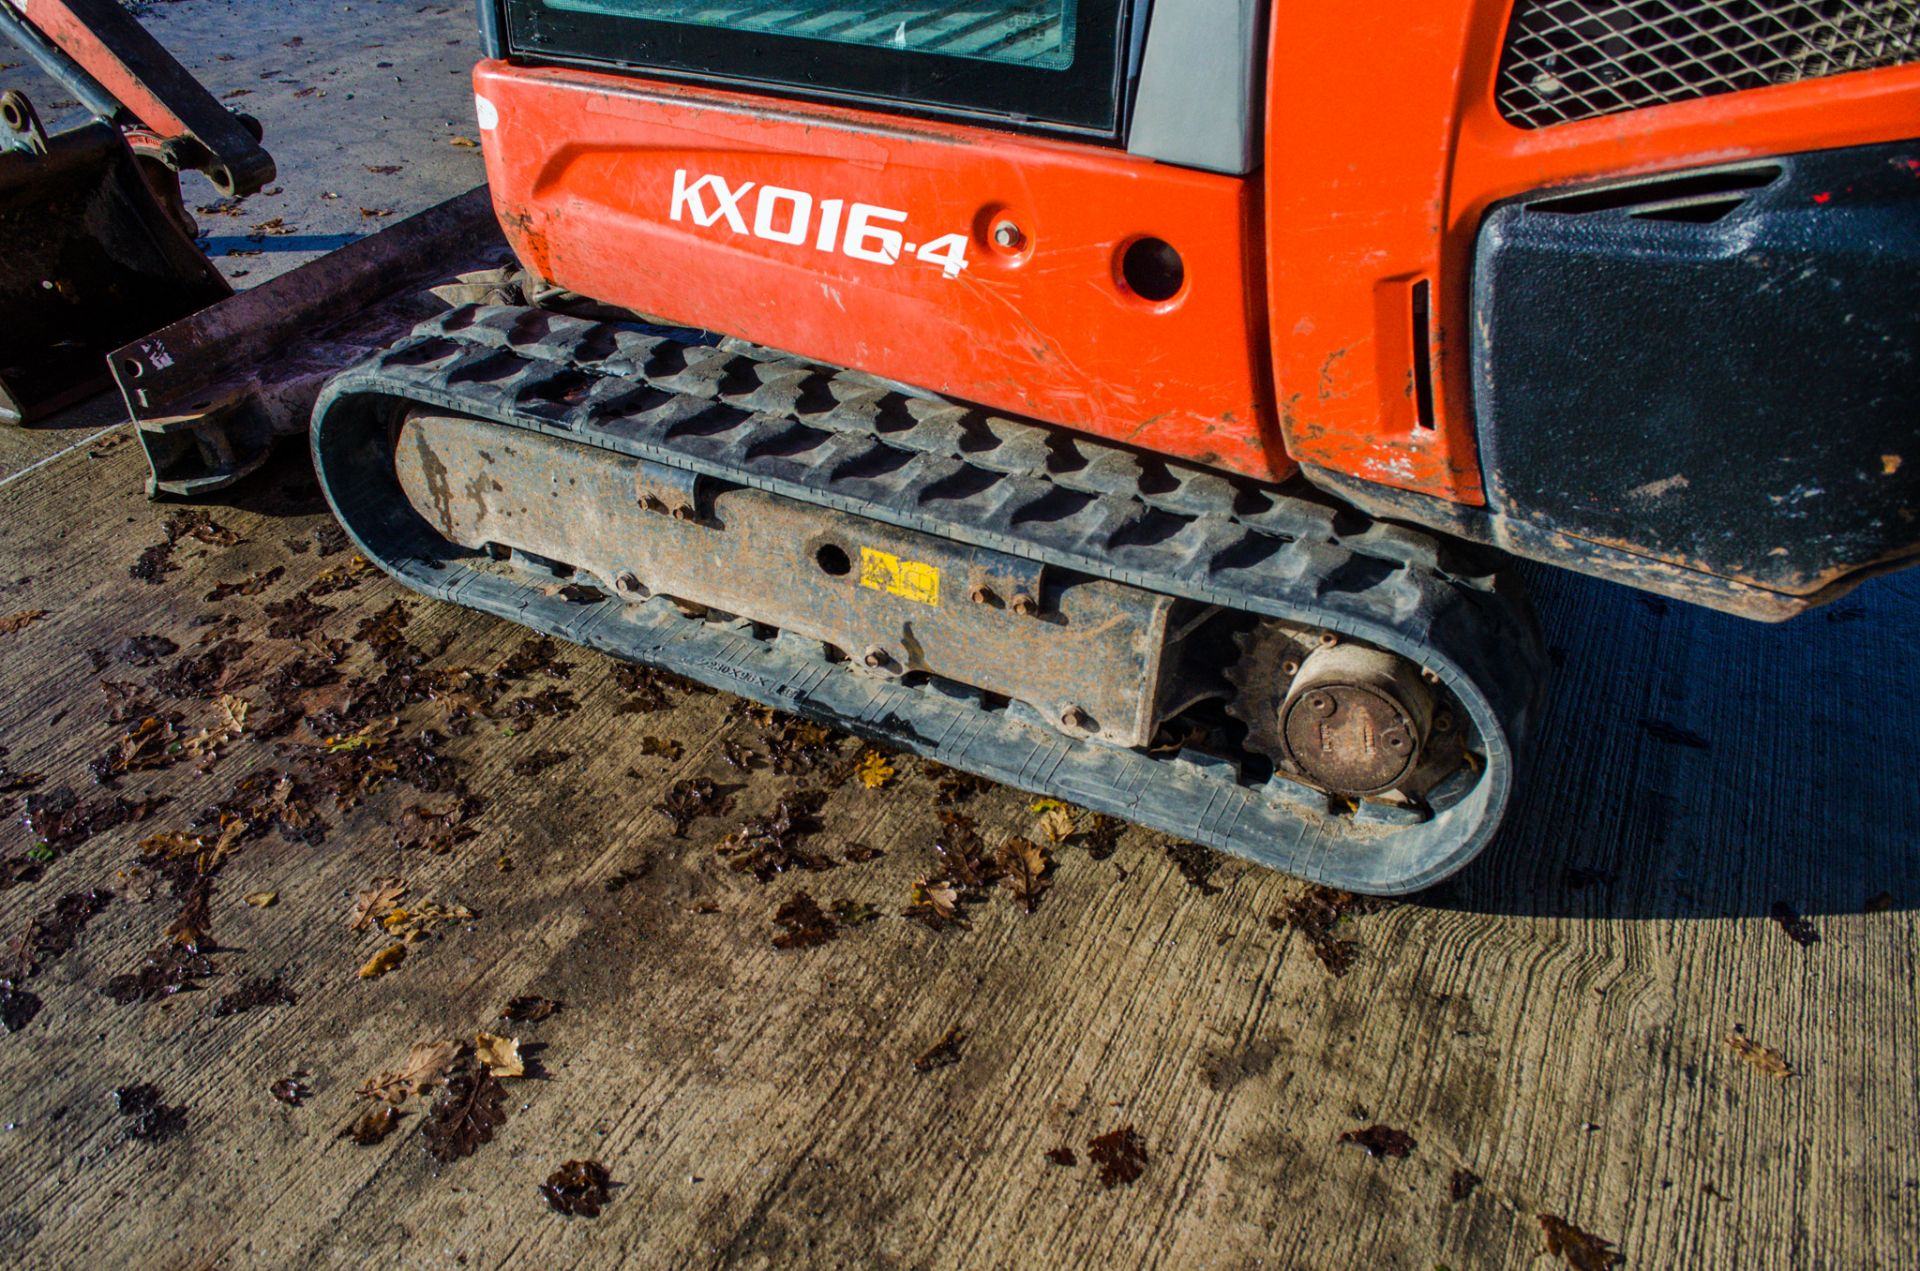 Kubota KX016-4 1.6 tonne rubber tracked mini excavator Year: 2015 S/N: 58337 Recorded Hours: 1792 - Image 9 of 19